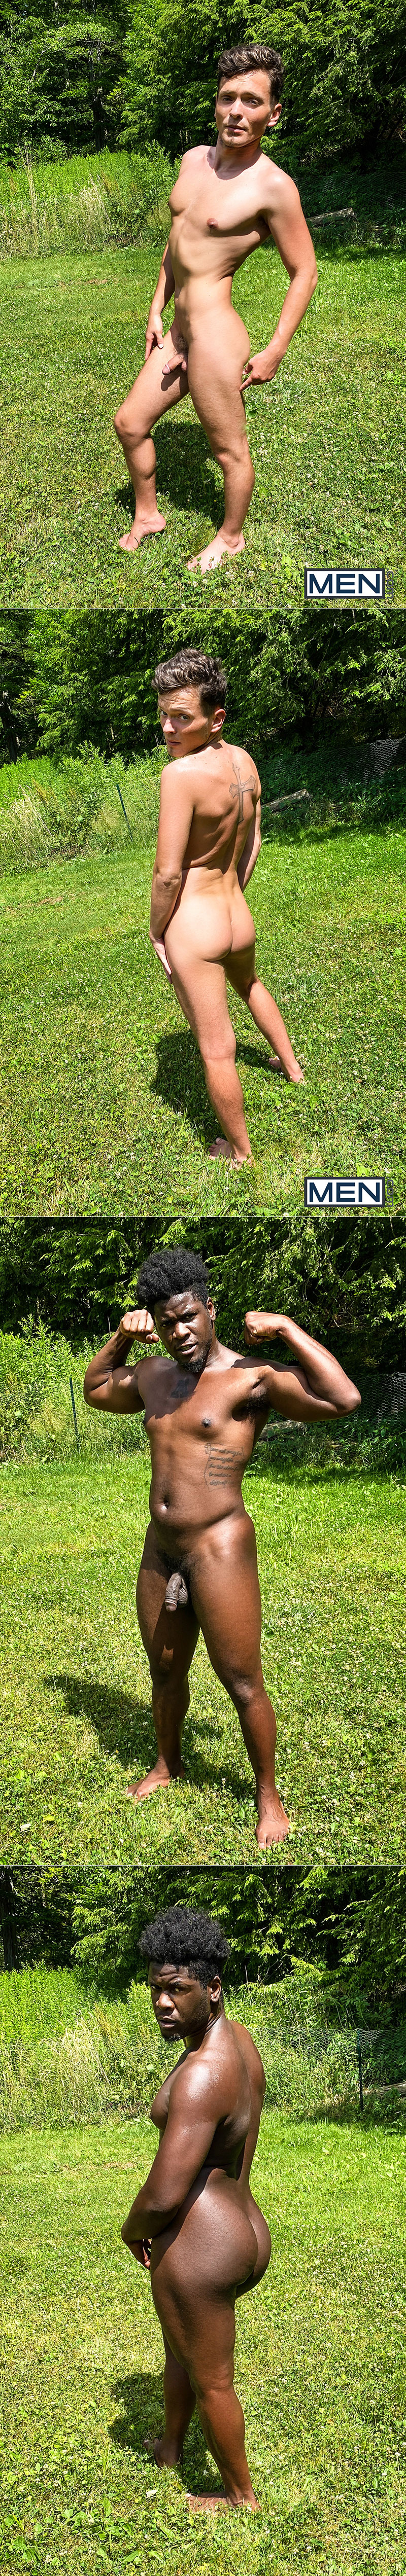 Men.com: Ty Shine pounds Bruno Cartella bareback in "Cockumber"